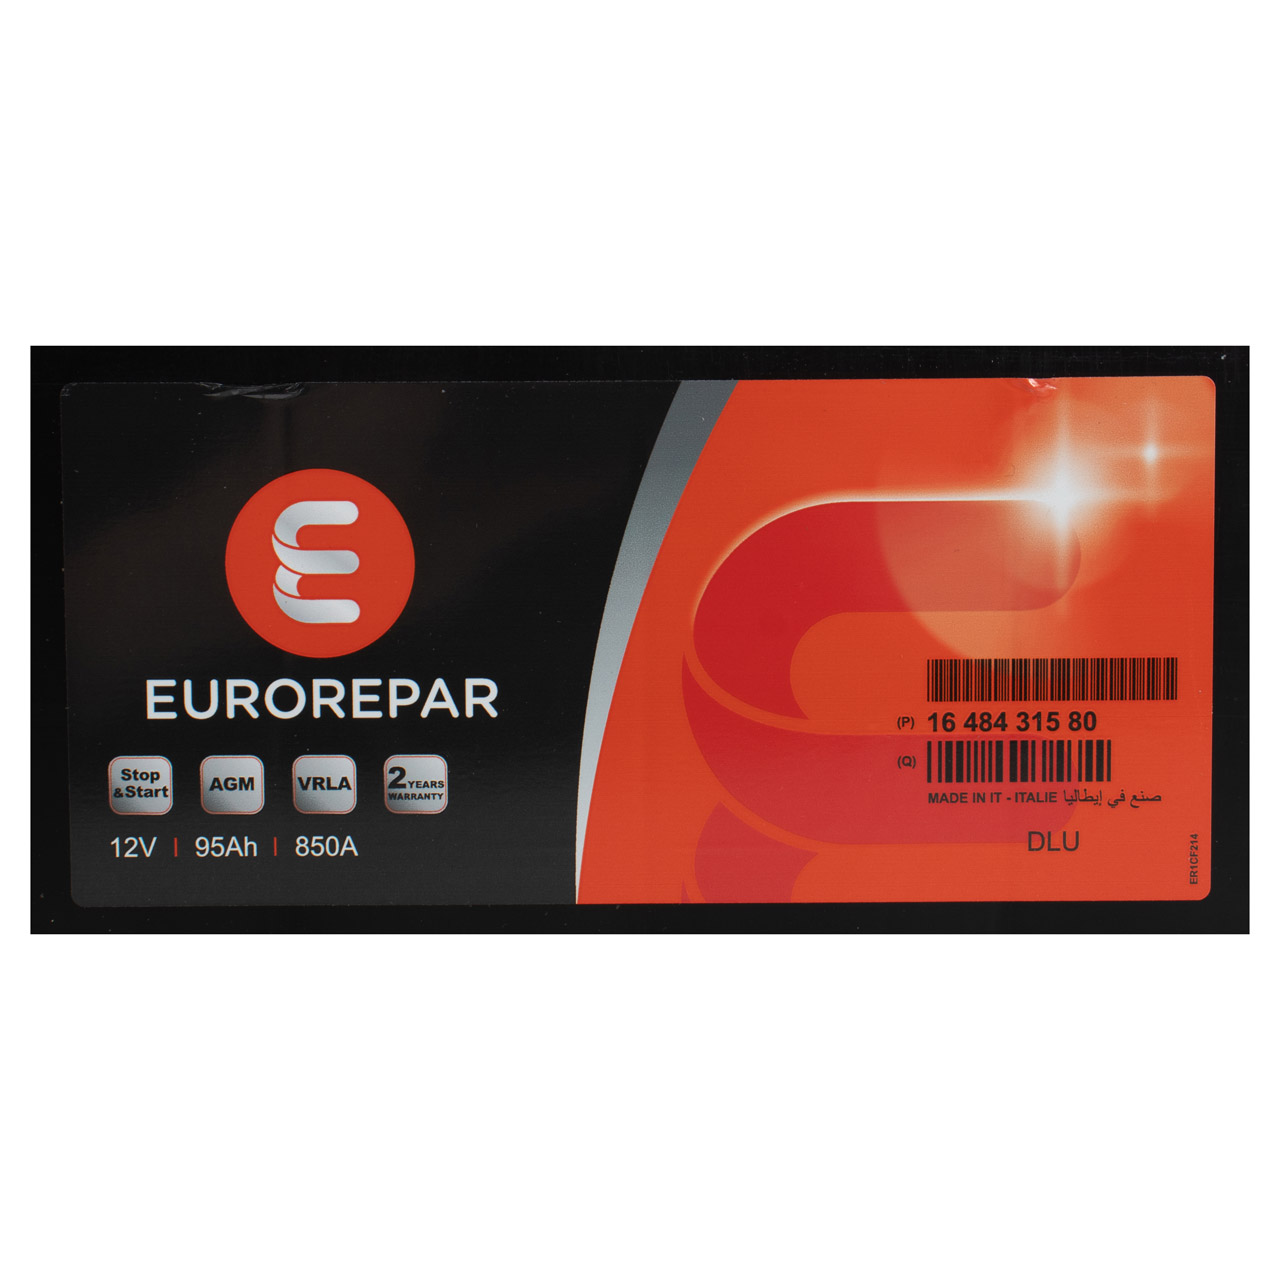 EUROREPAR Starterbatterien / Autobatterien - 16 484 315 80 